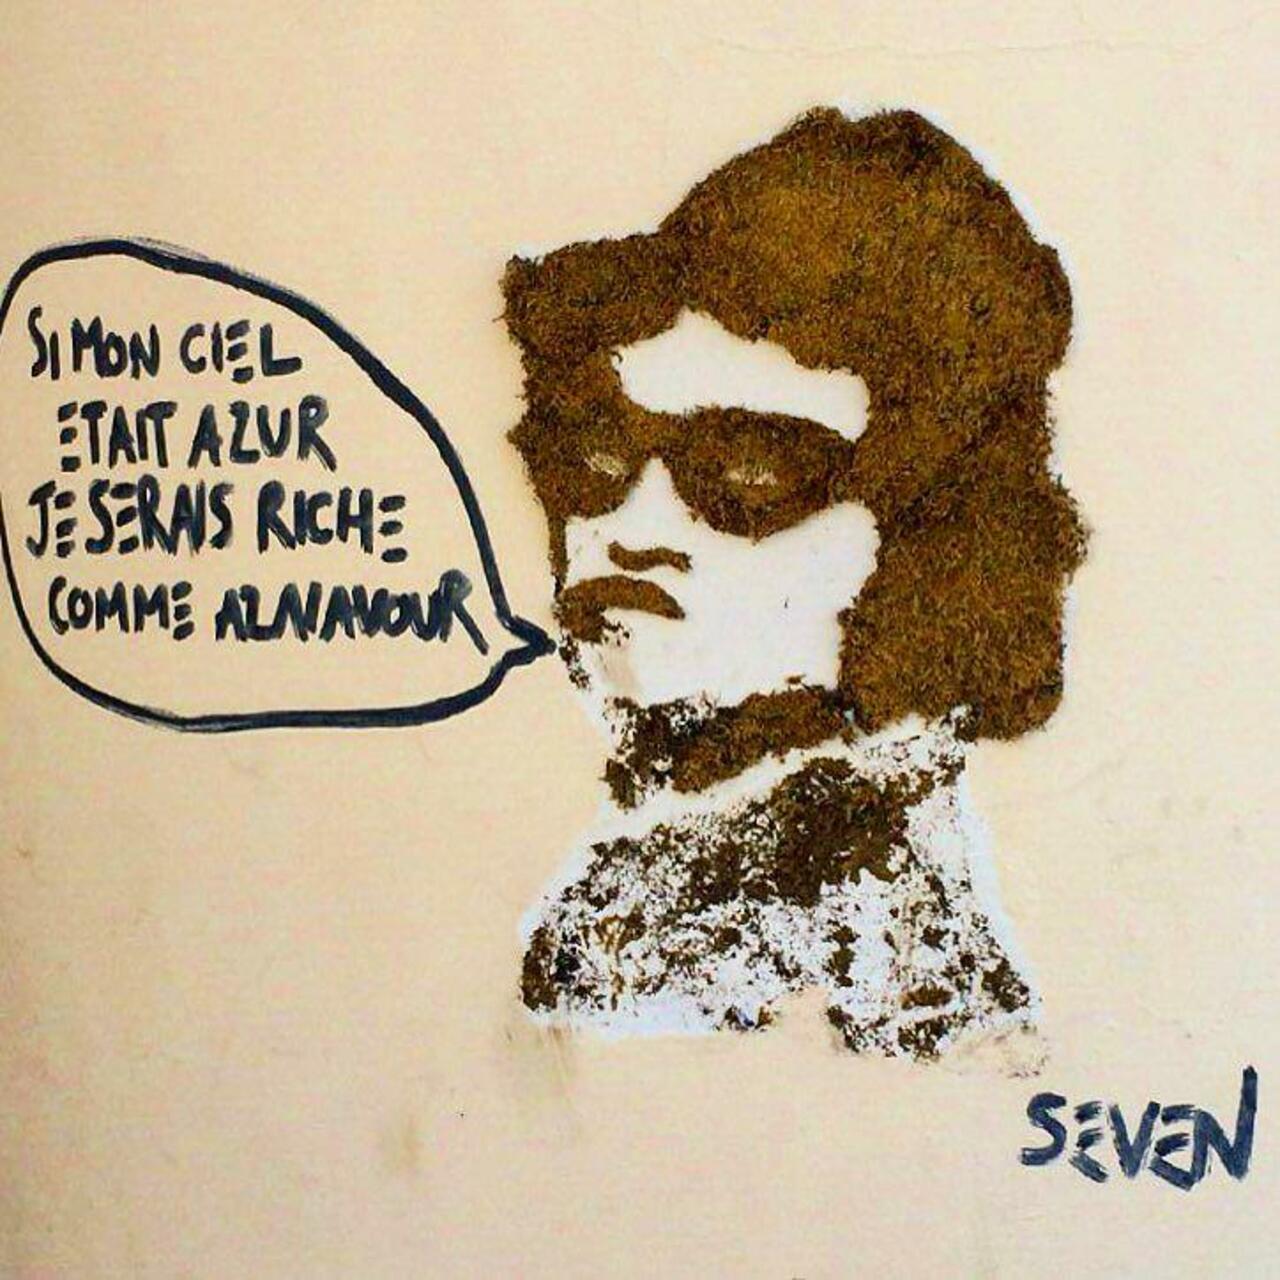 #Paris #graffiti photo by @jpoesse http://ift.tt/1JHNZ5t #StreetArt http://t.co/dX6oQEoy0V